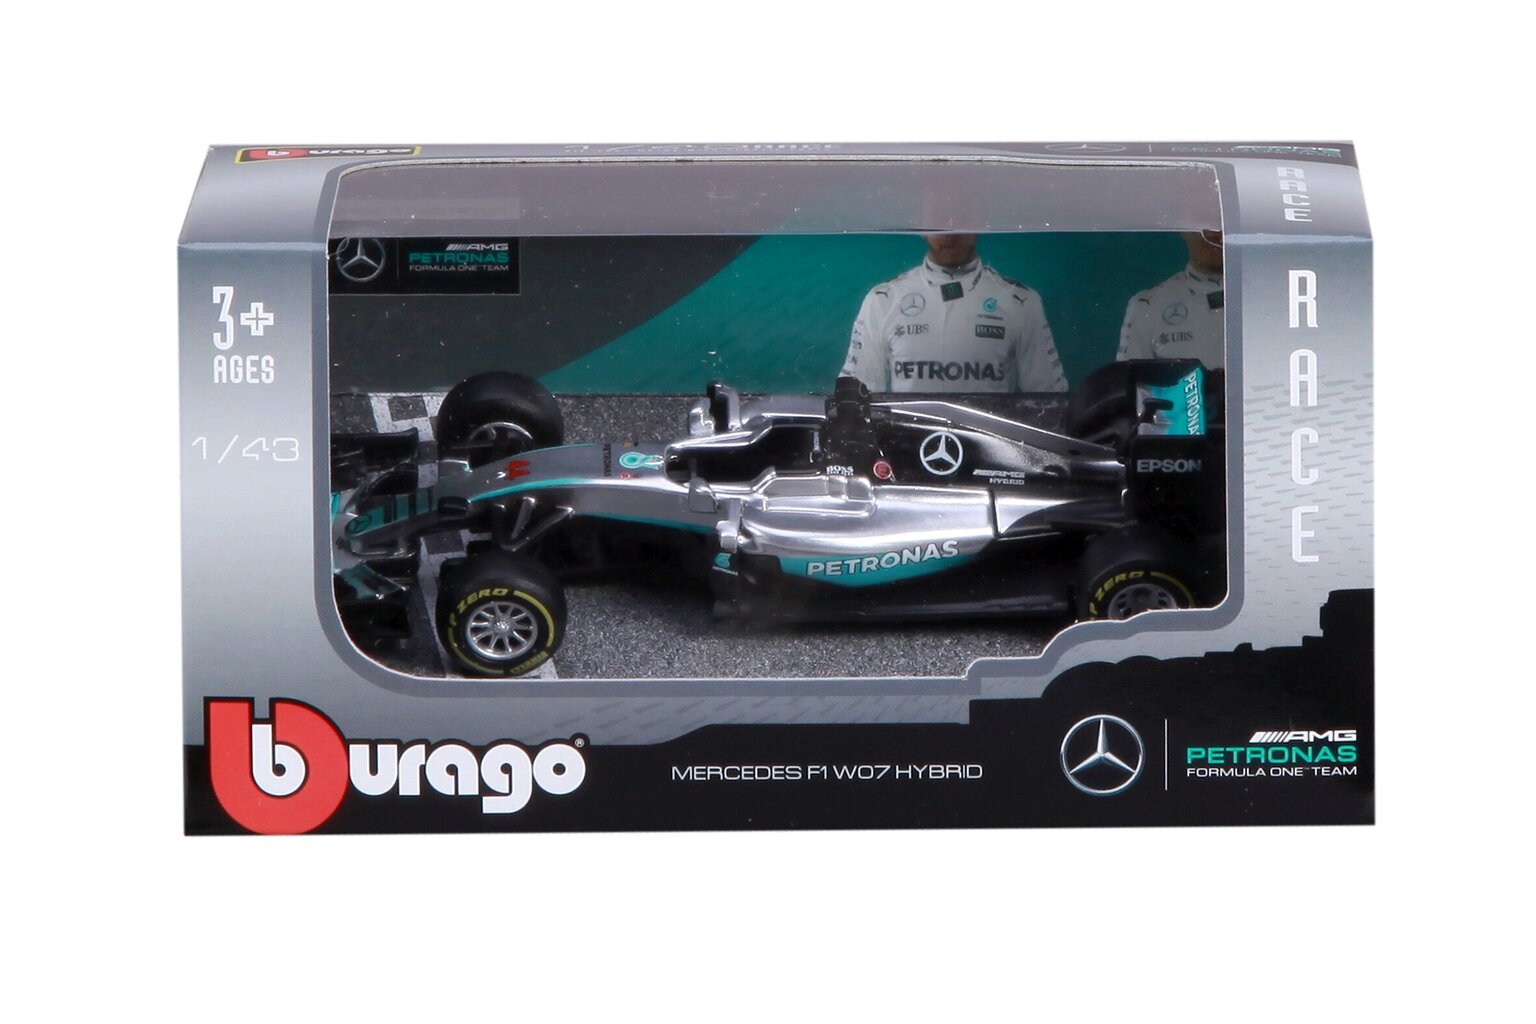 Automodelis Burrago 1/43 Racing 2016 Mercedes AMG Petronas W07 Hybrid, 18-38026 цена и информация | Žaislai berniukams | pigu.lt